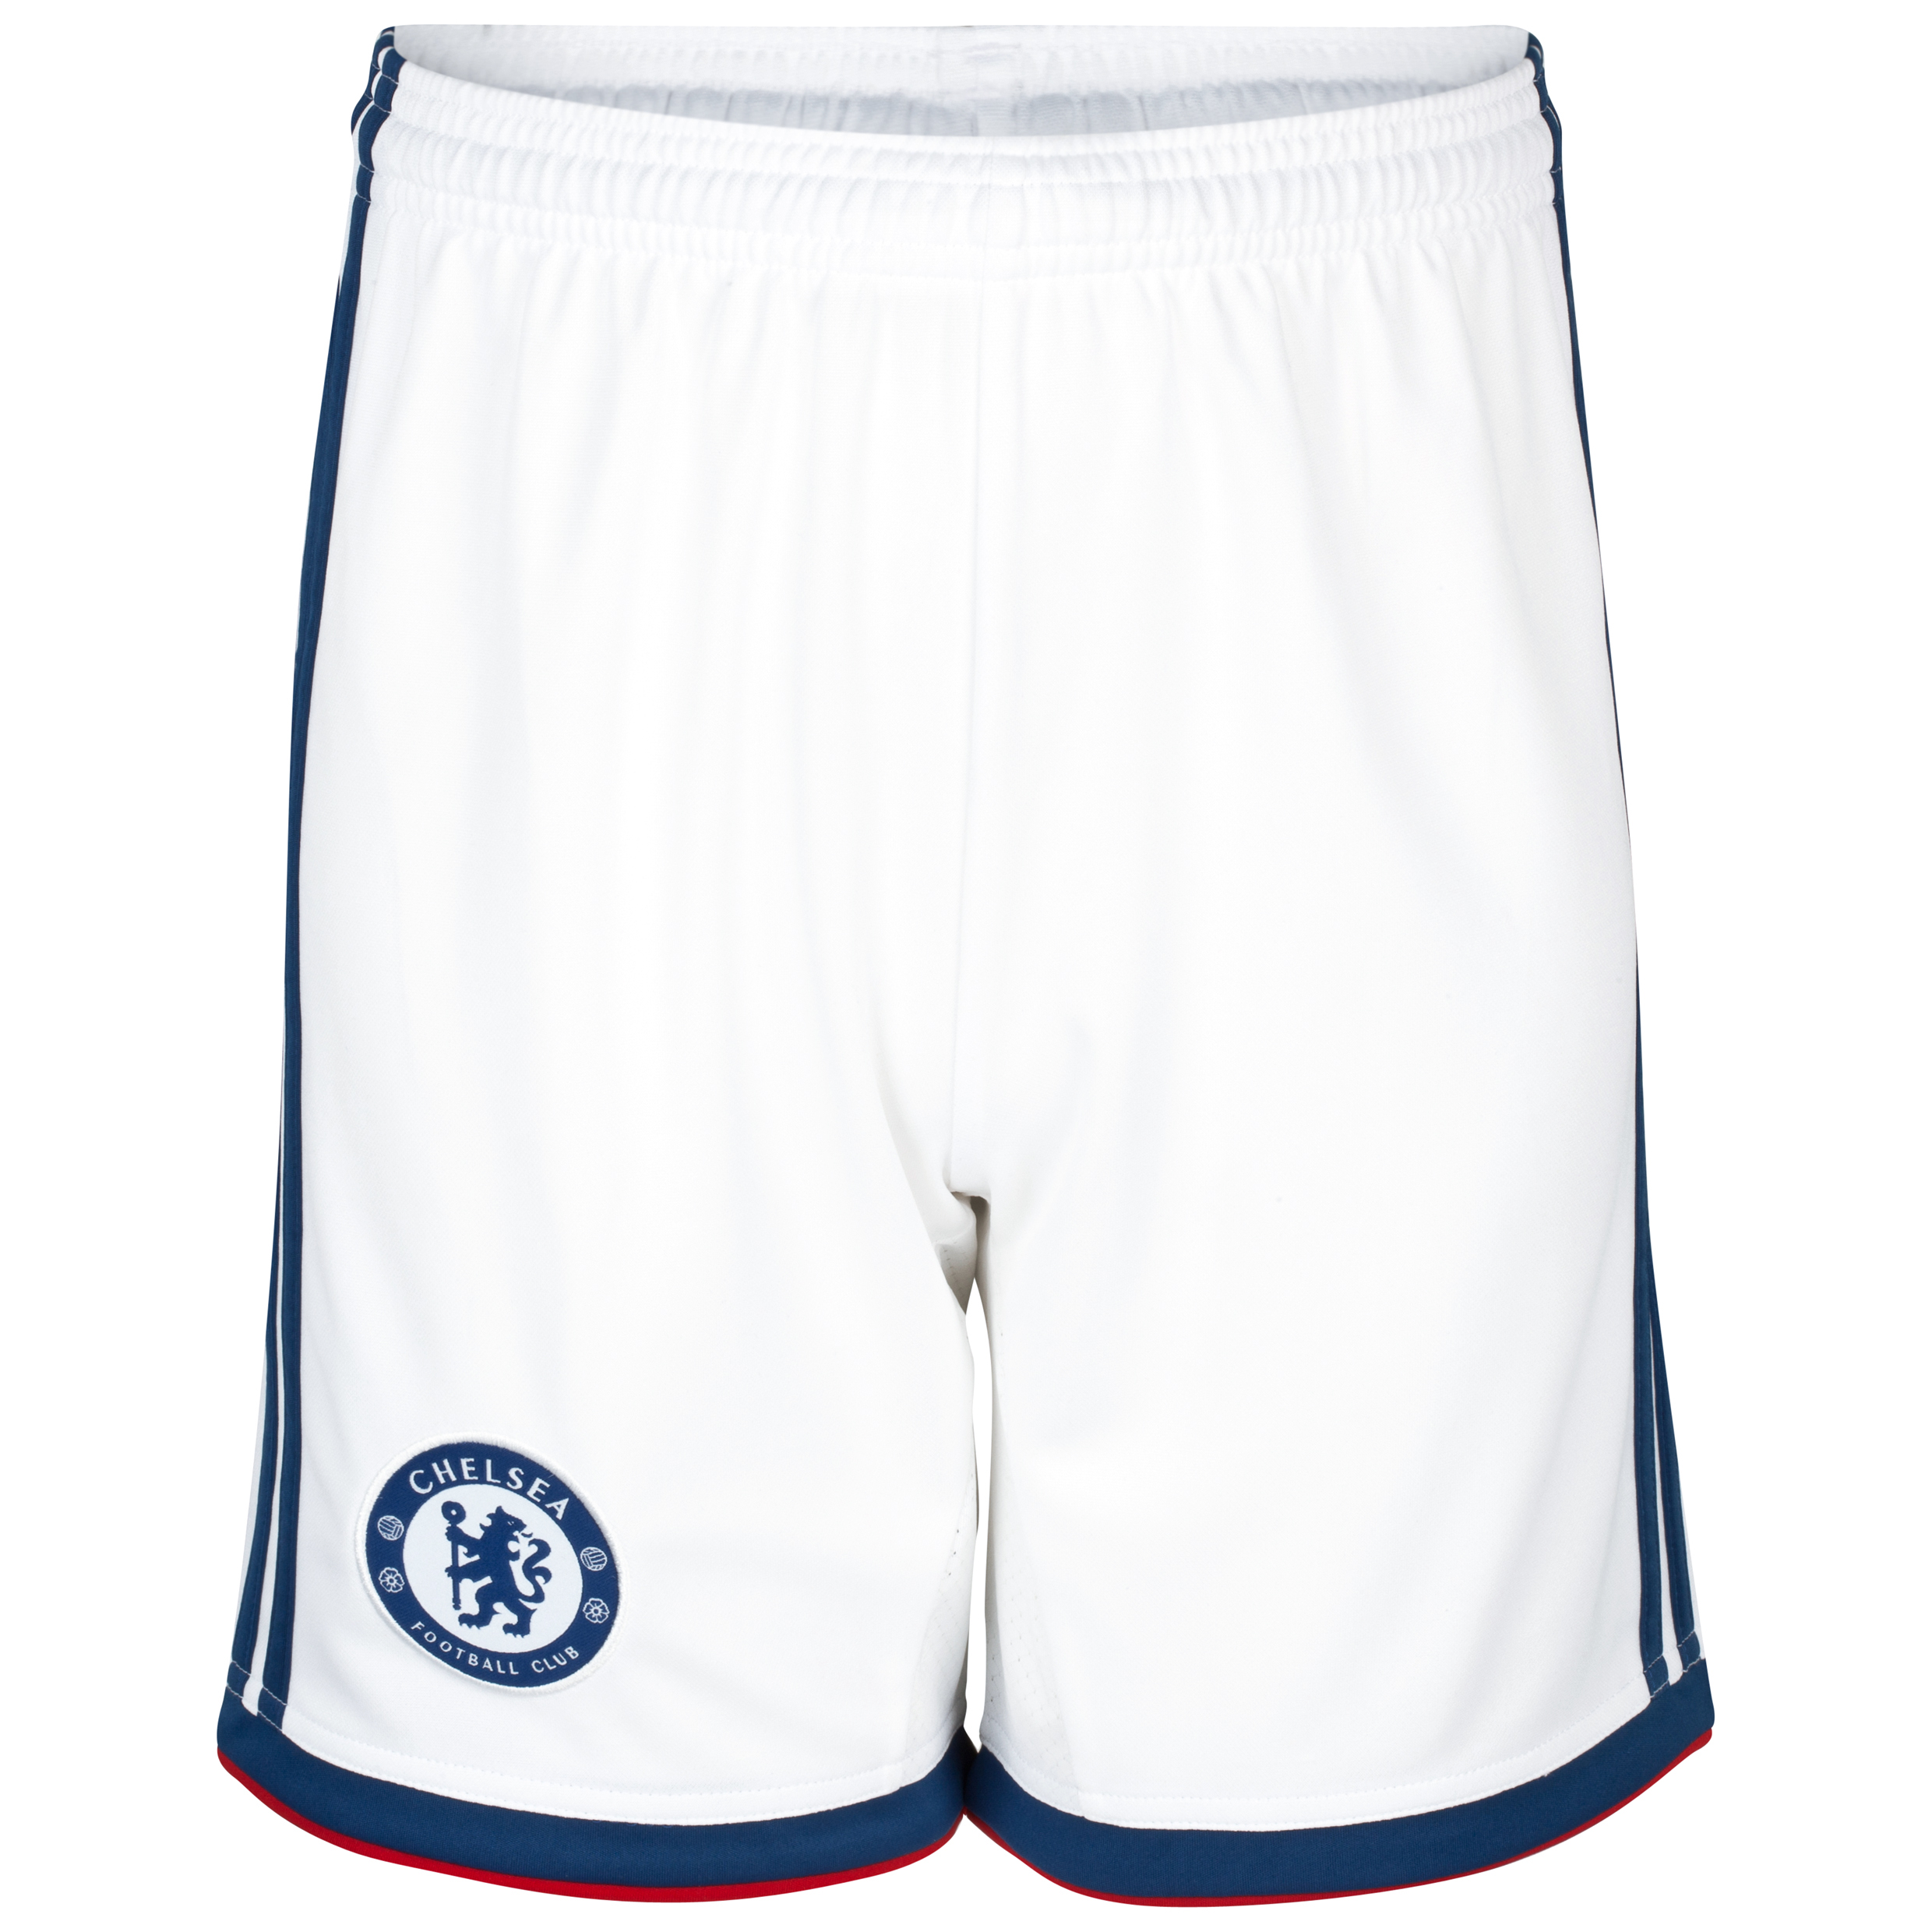 Chelsea Away Shorts 2013/14